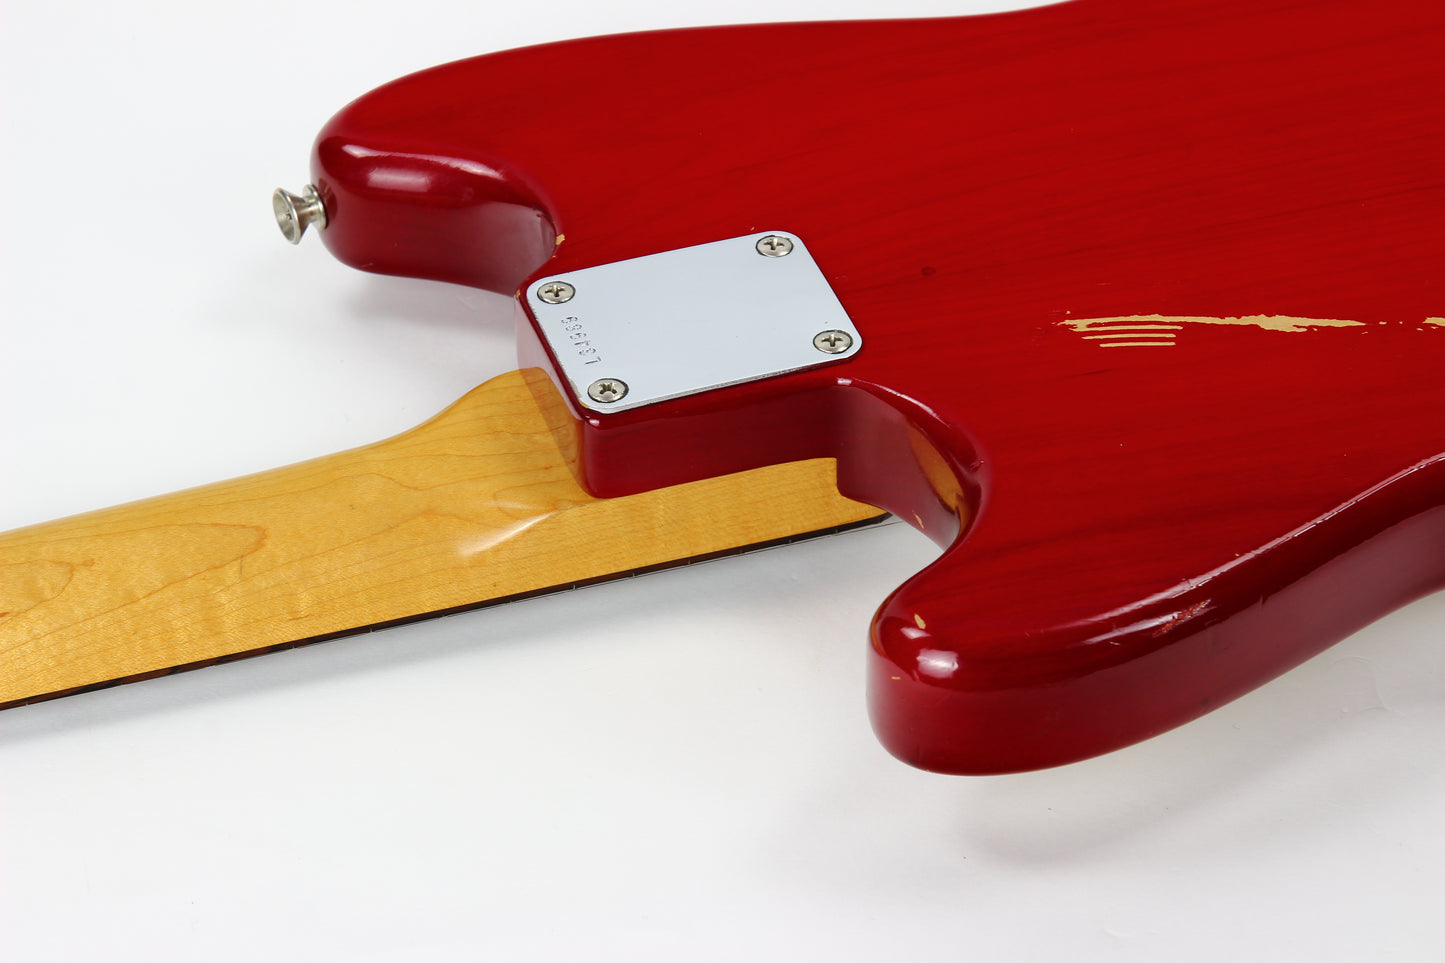 1964 Fender Musicmaster RARE Cherry Red | Pre-CBS duo sonic vintage